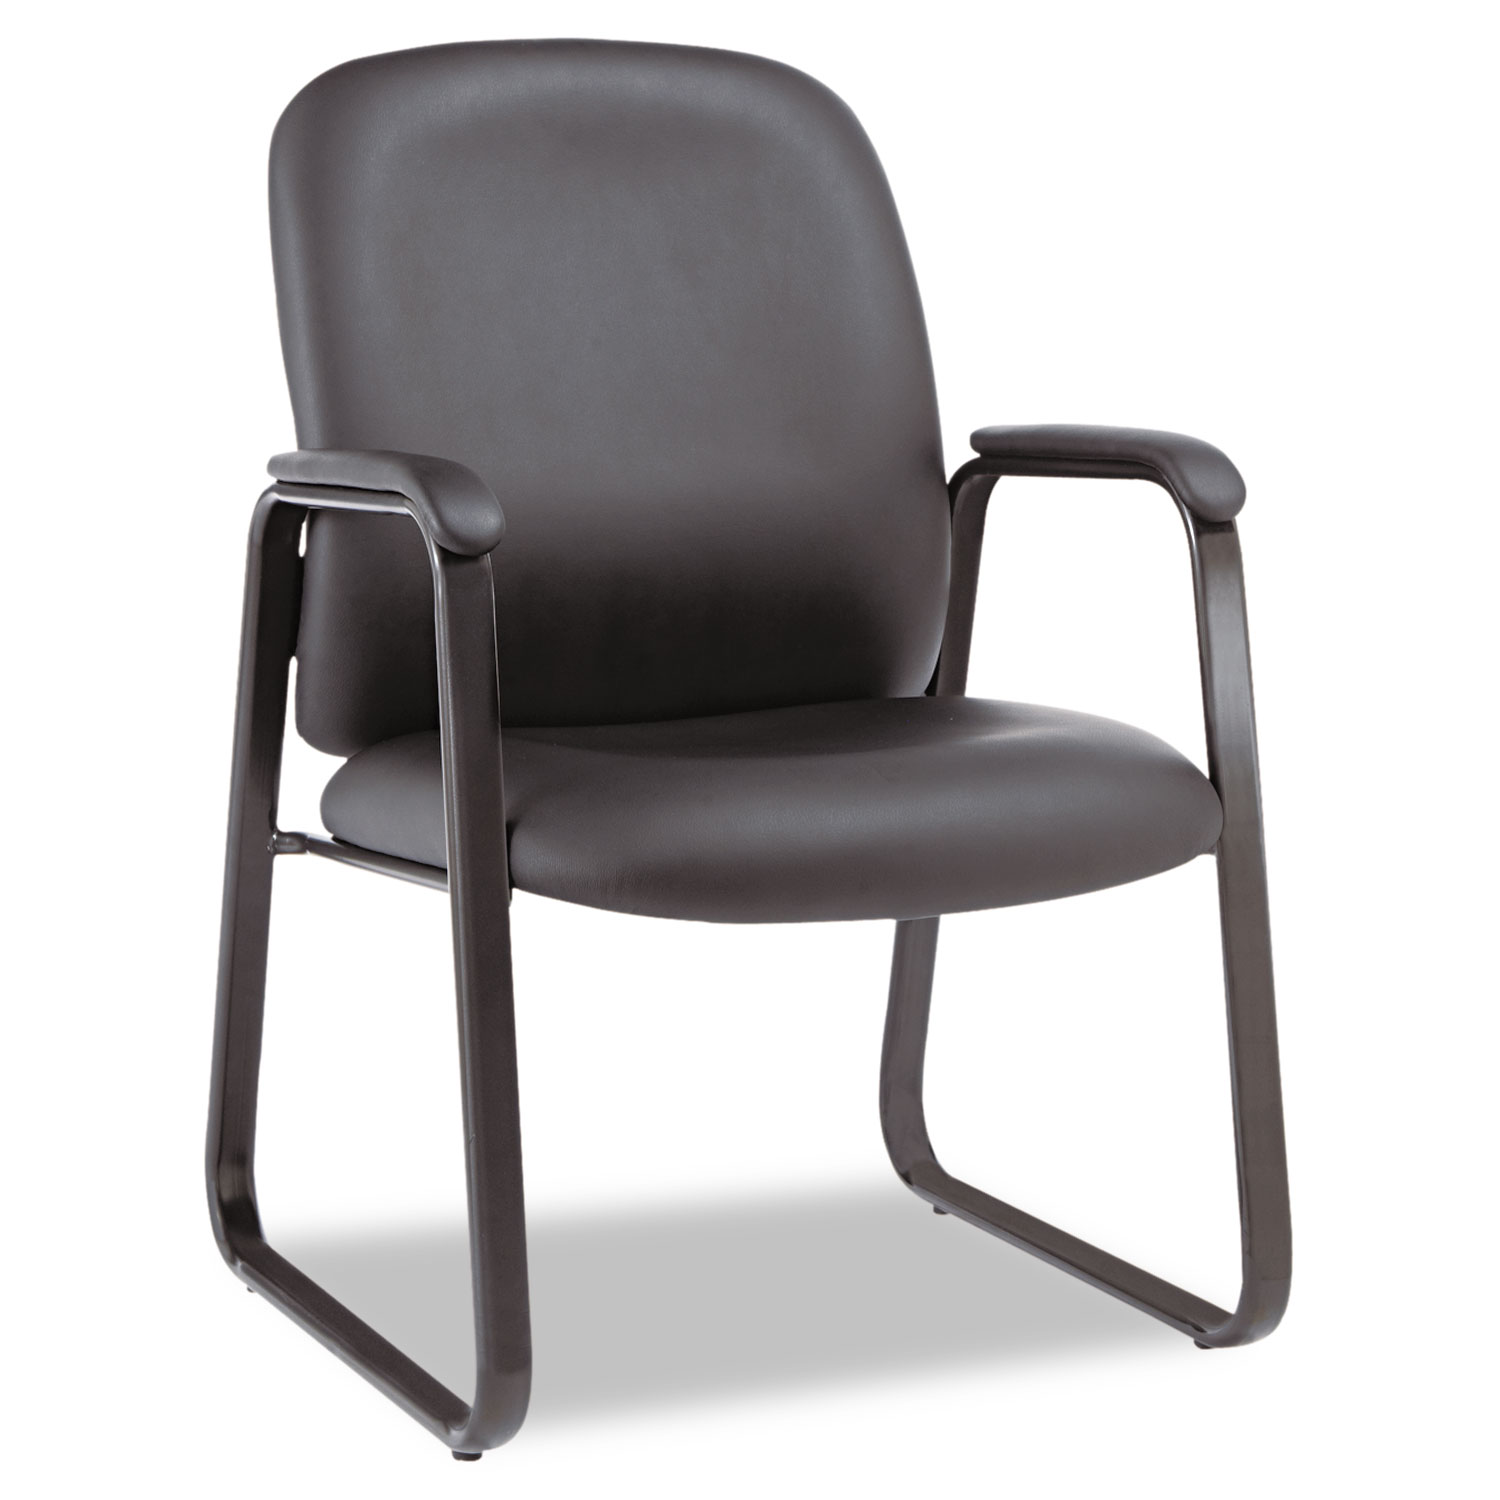  Alera ALEGE43LS10B Alera Genaro High-Back Guest Chair, 24.60 x 24.80 x 36.61, Black Seat/Black Back, Black Base (ALEGE43LS10B) 